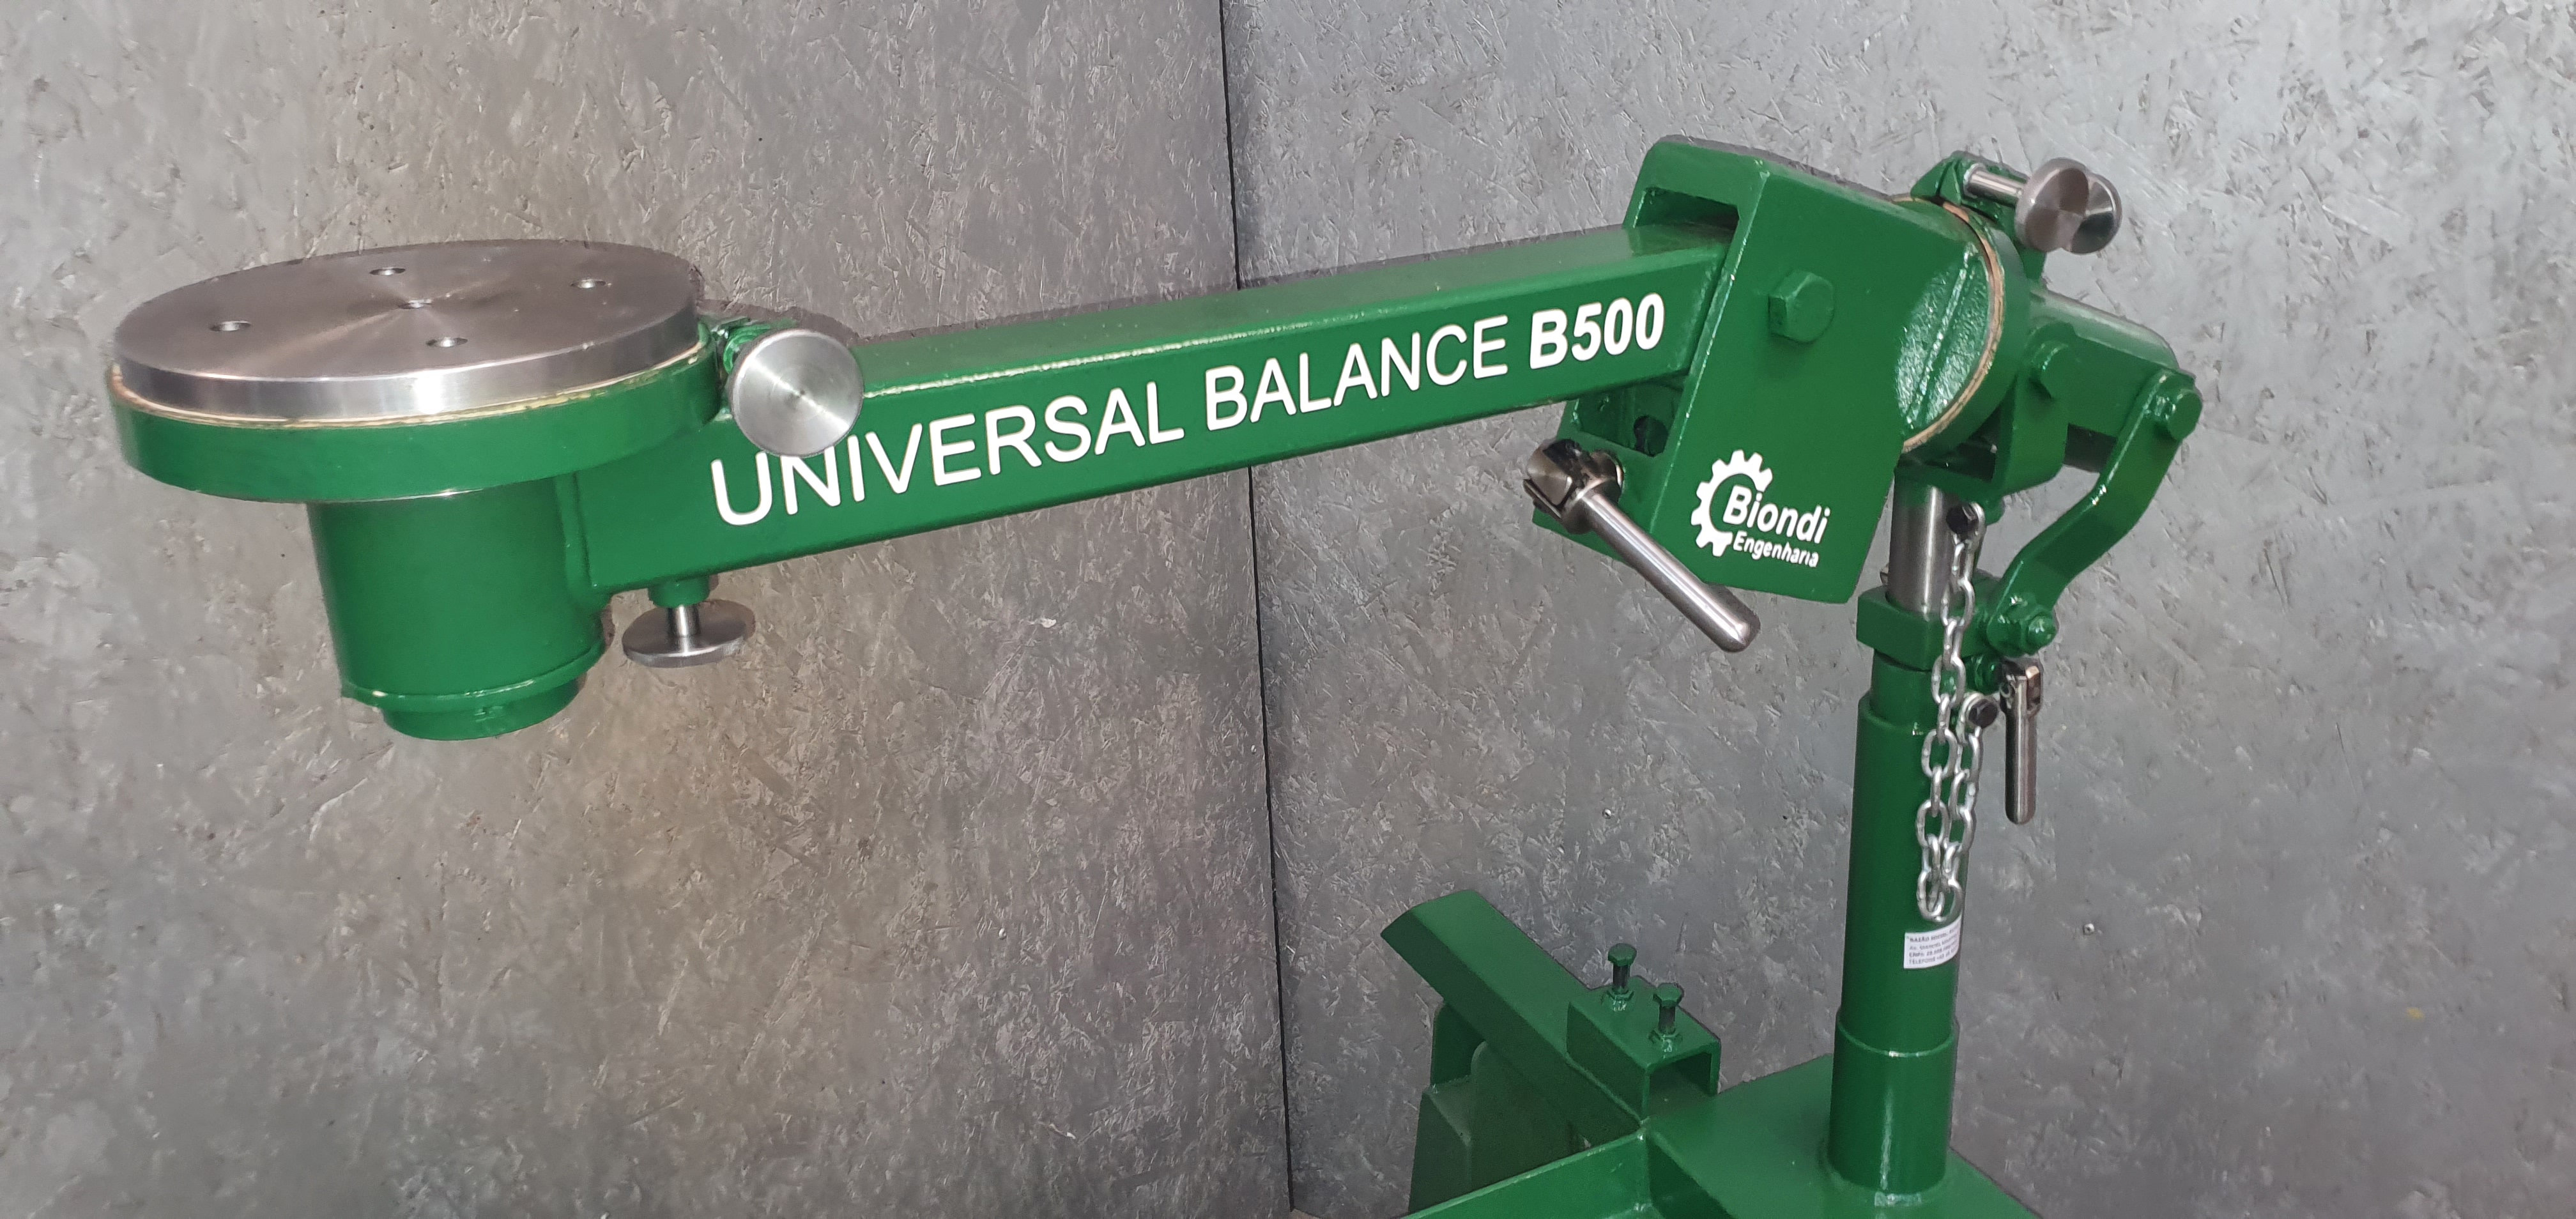 UV universal balance